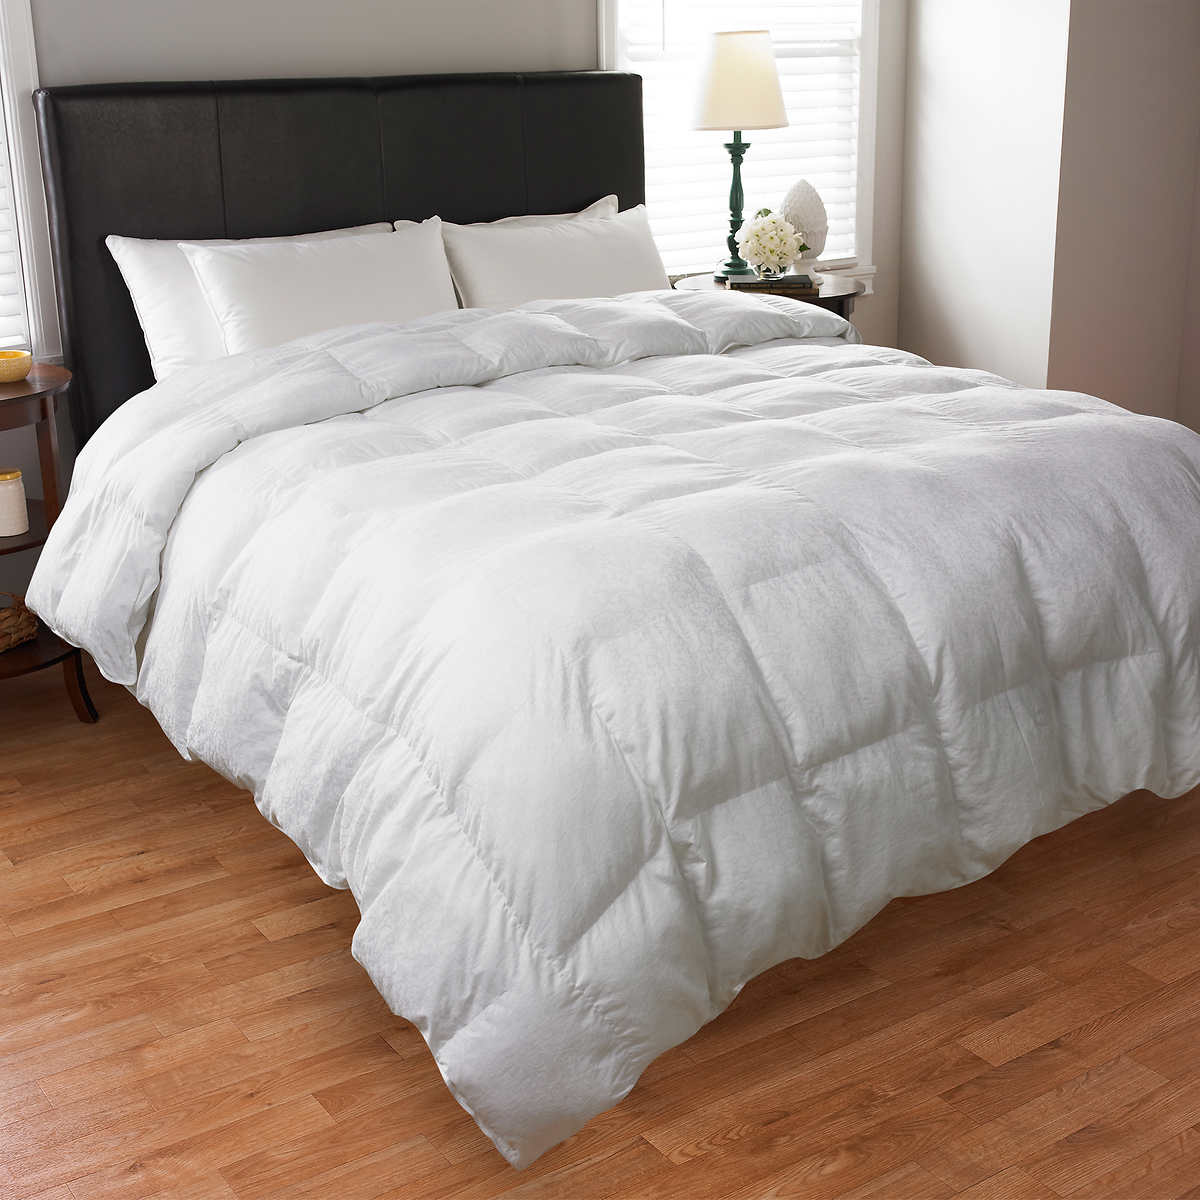 Sleepbetter Beyond Down Alternative Comforter